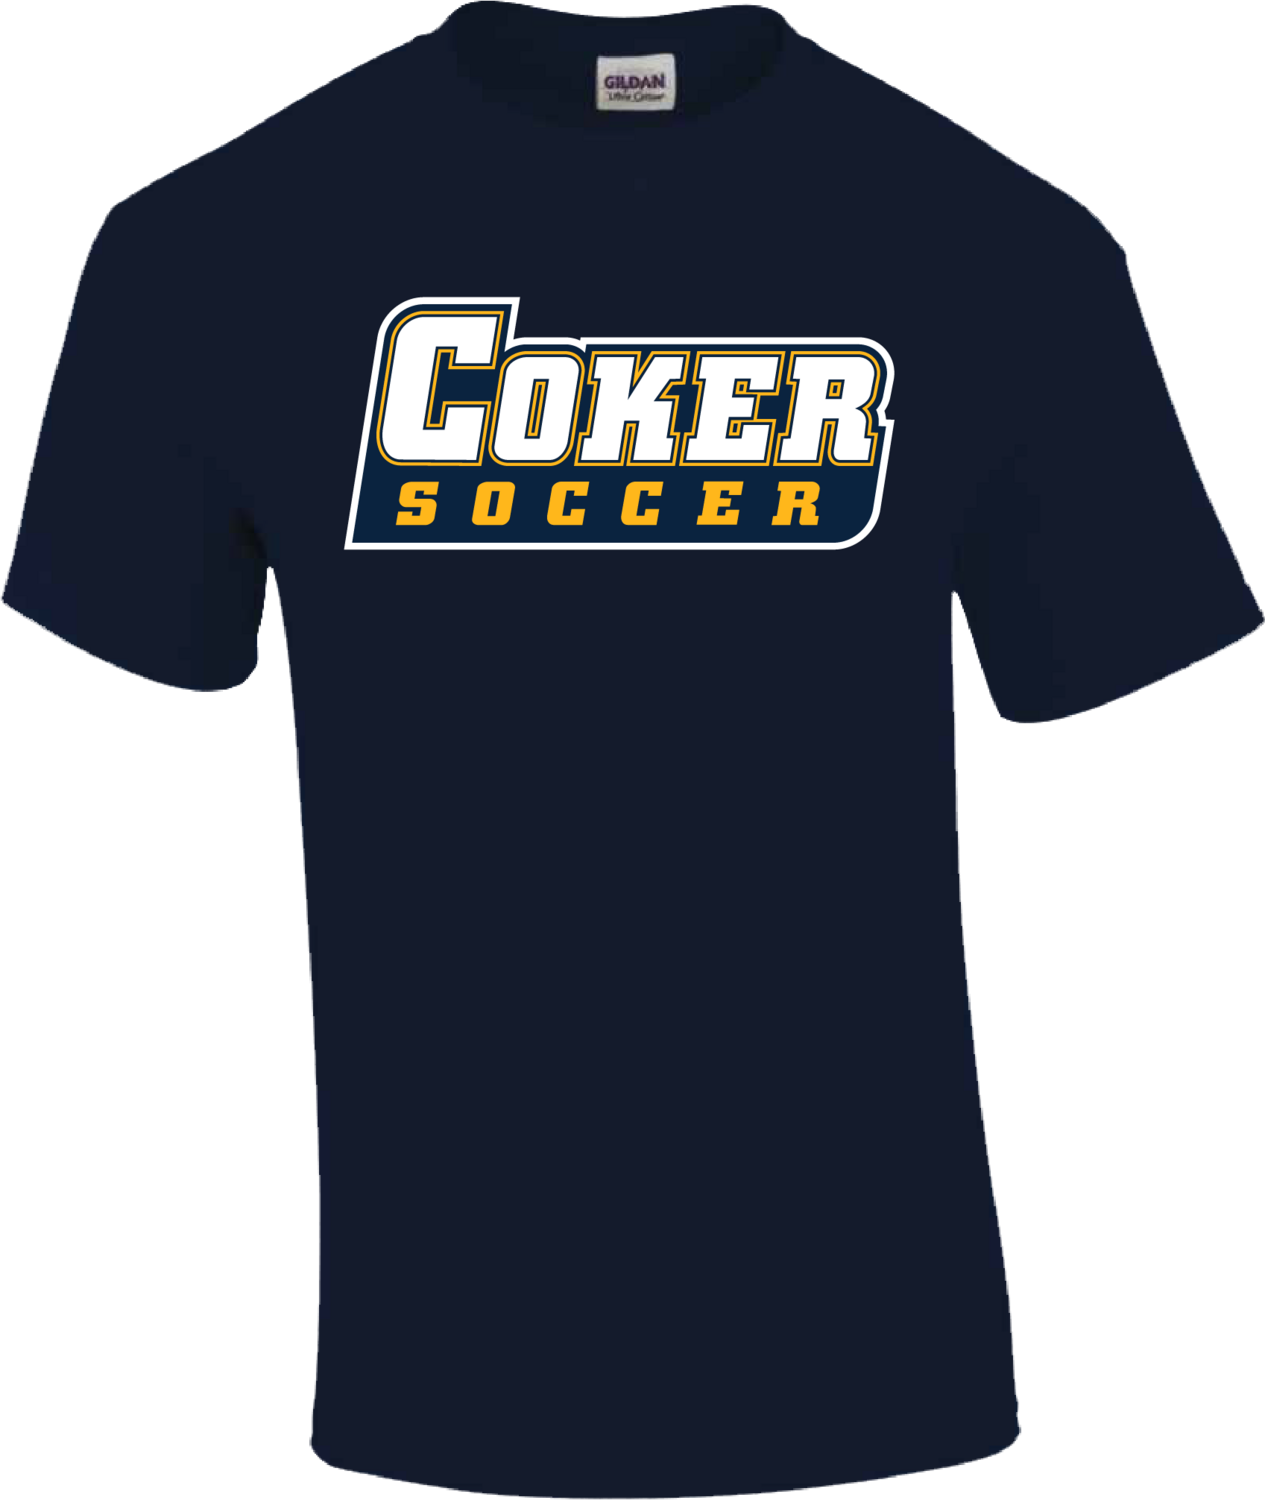 Gildan Coker Soccer (Navy), size: Small